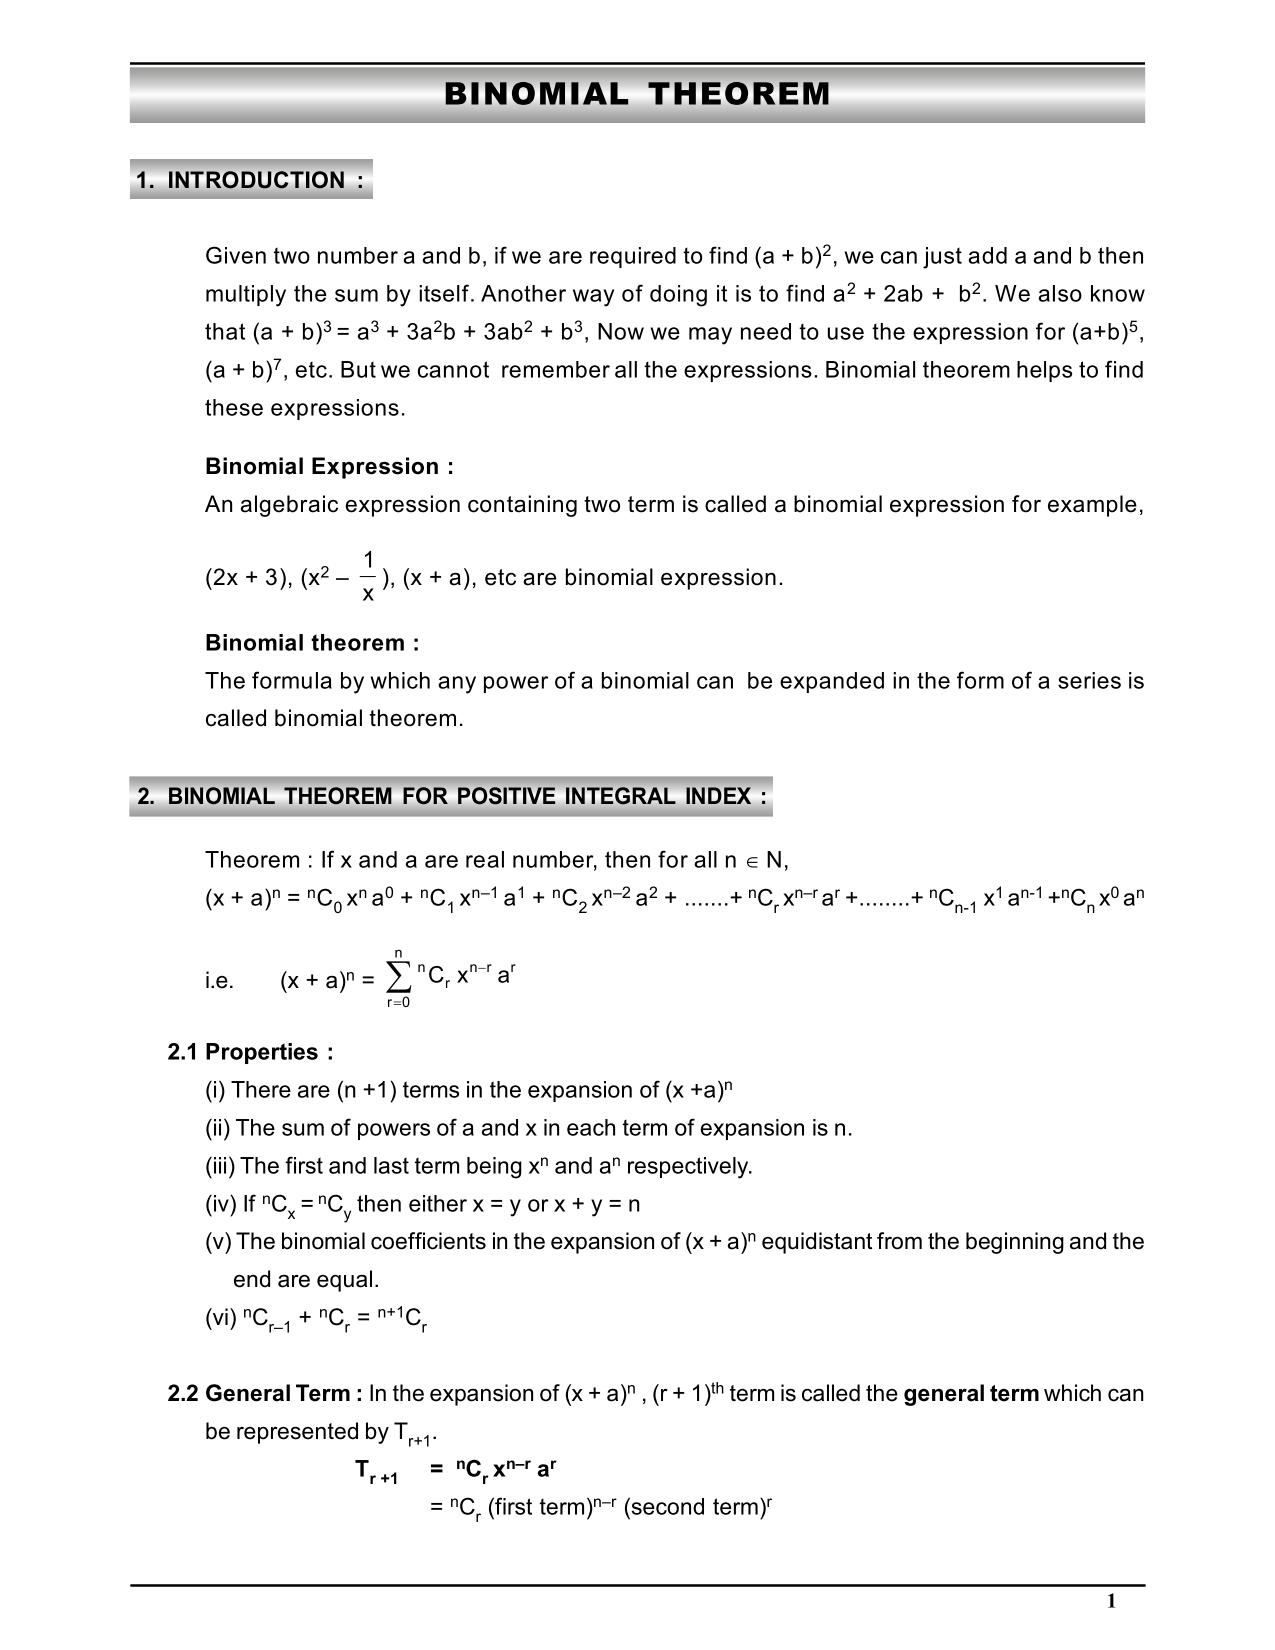 Binomial Theorem Class 11 Notes 